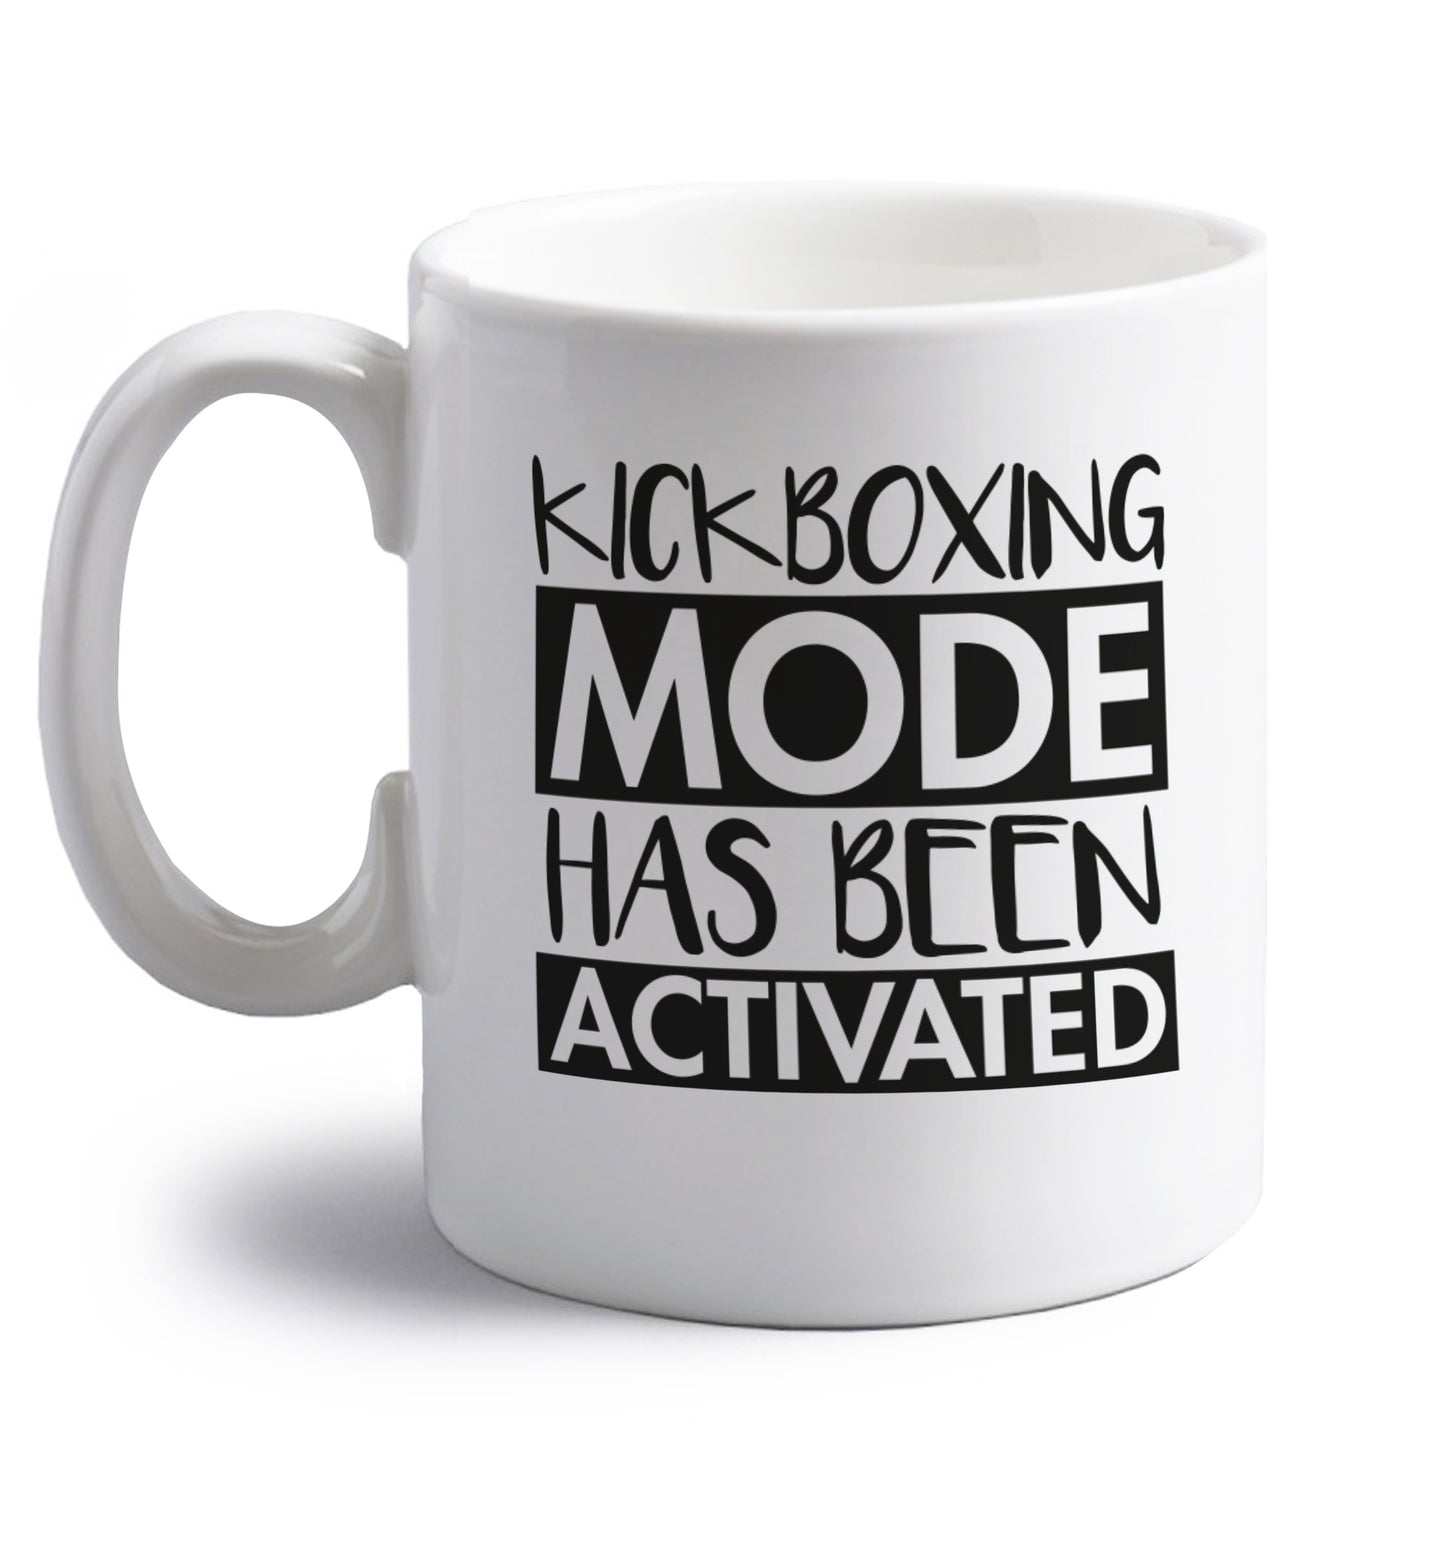 Kickboxing mode activated right handed white ceramic mug 